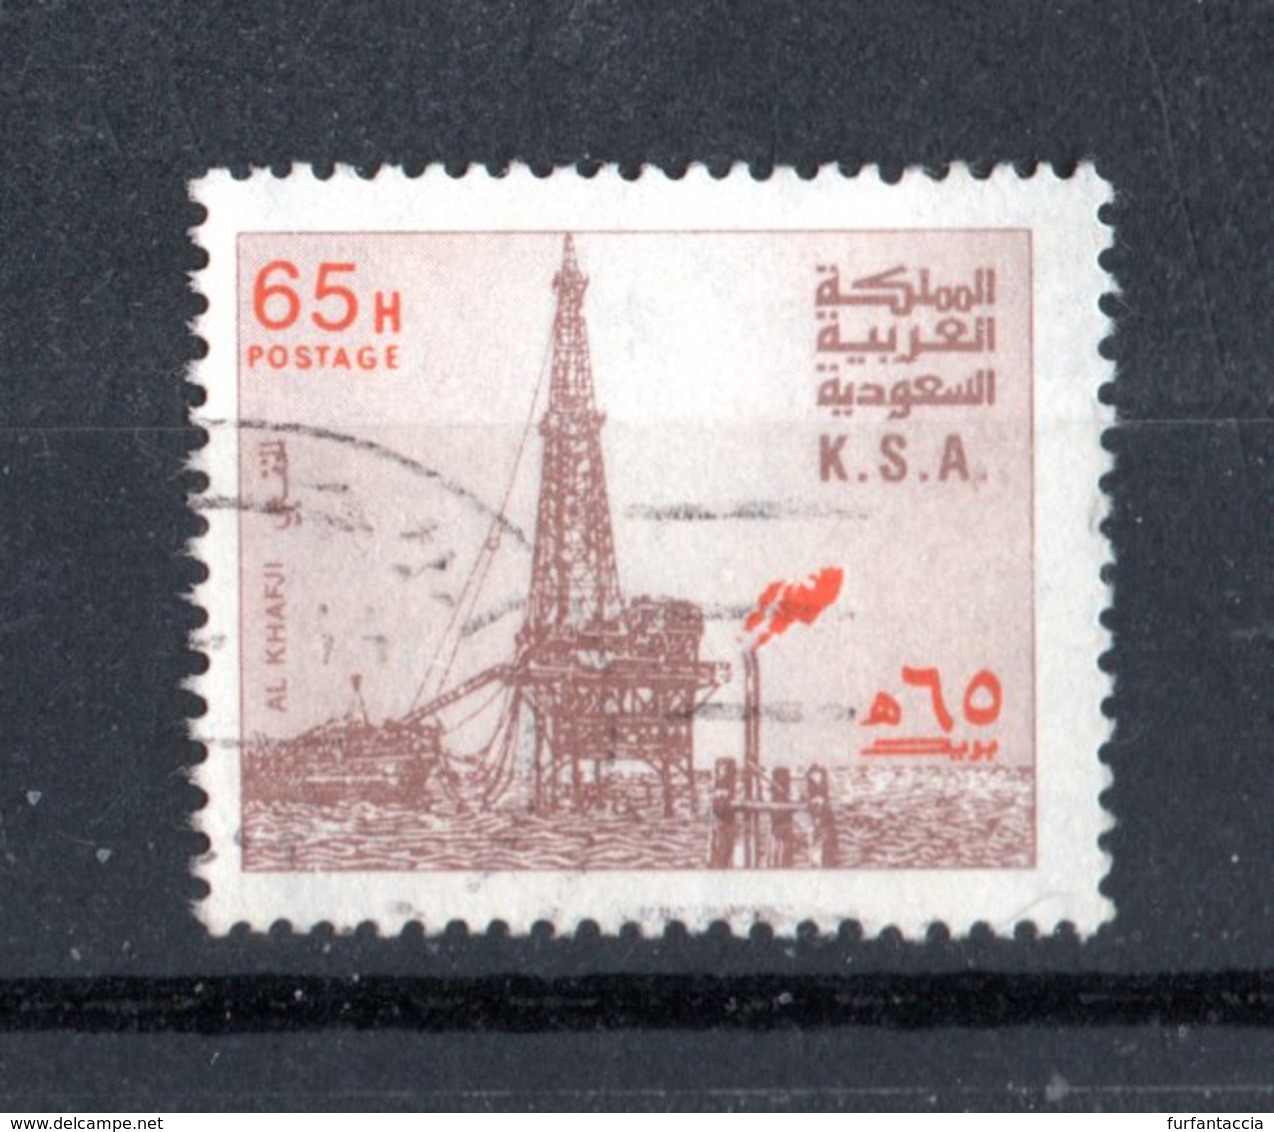 ARABIA SAUDITA :  Piattaforma  Petrolifera  -  1 Val. Usato  Del   1977 - Saudi Arabia